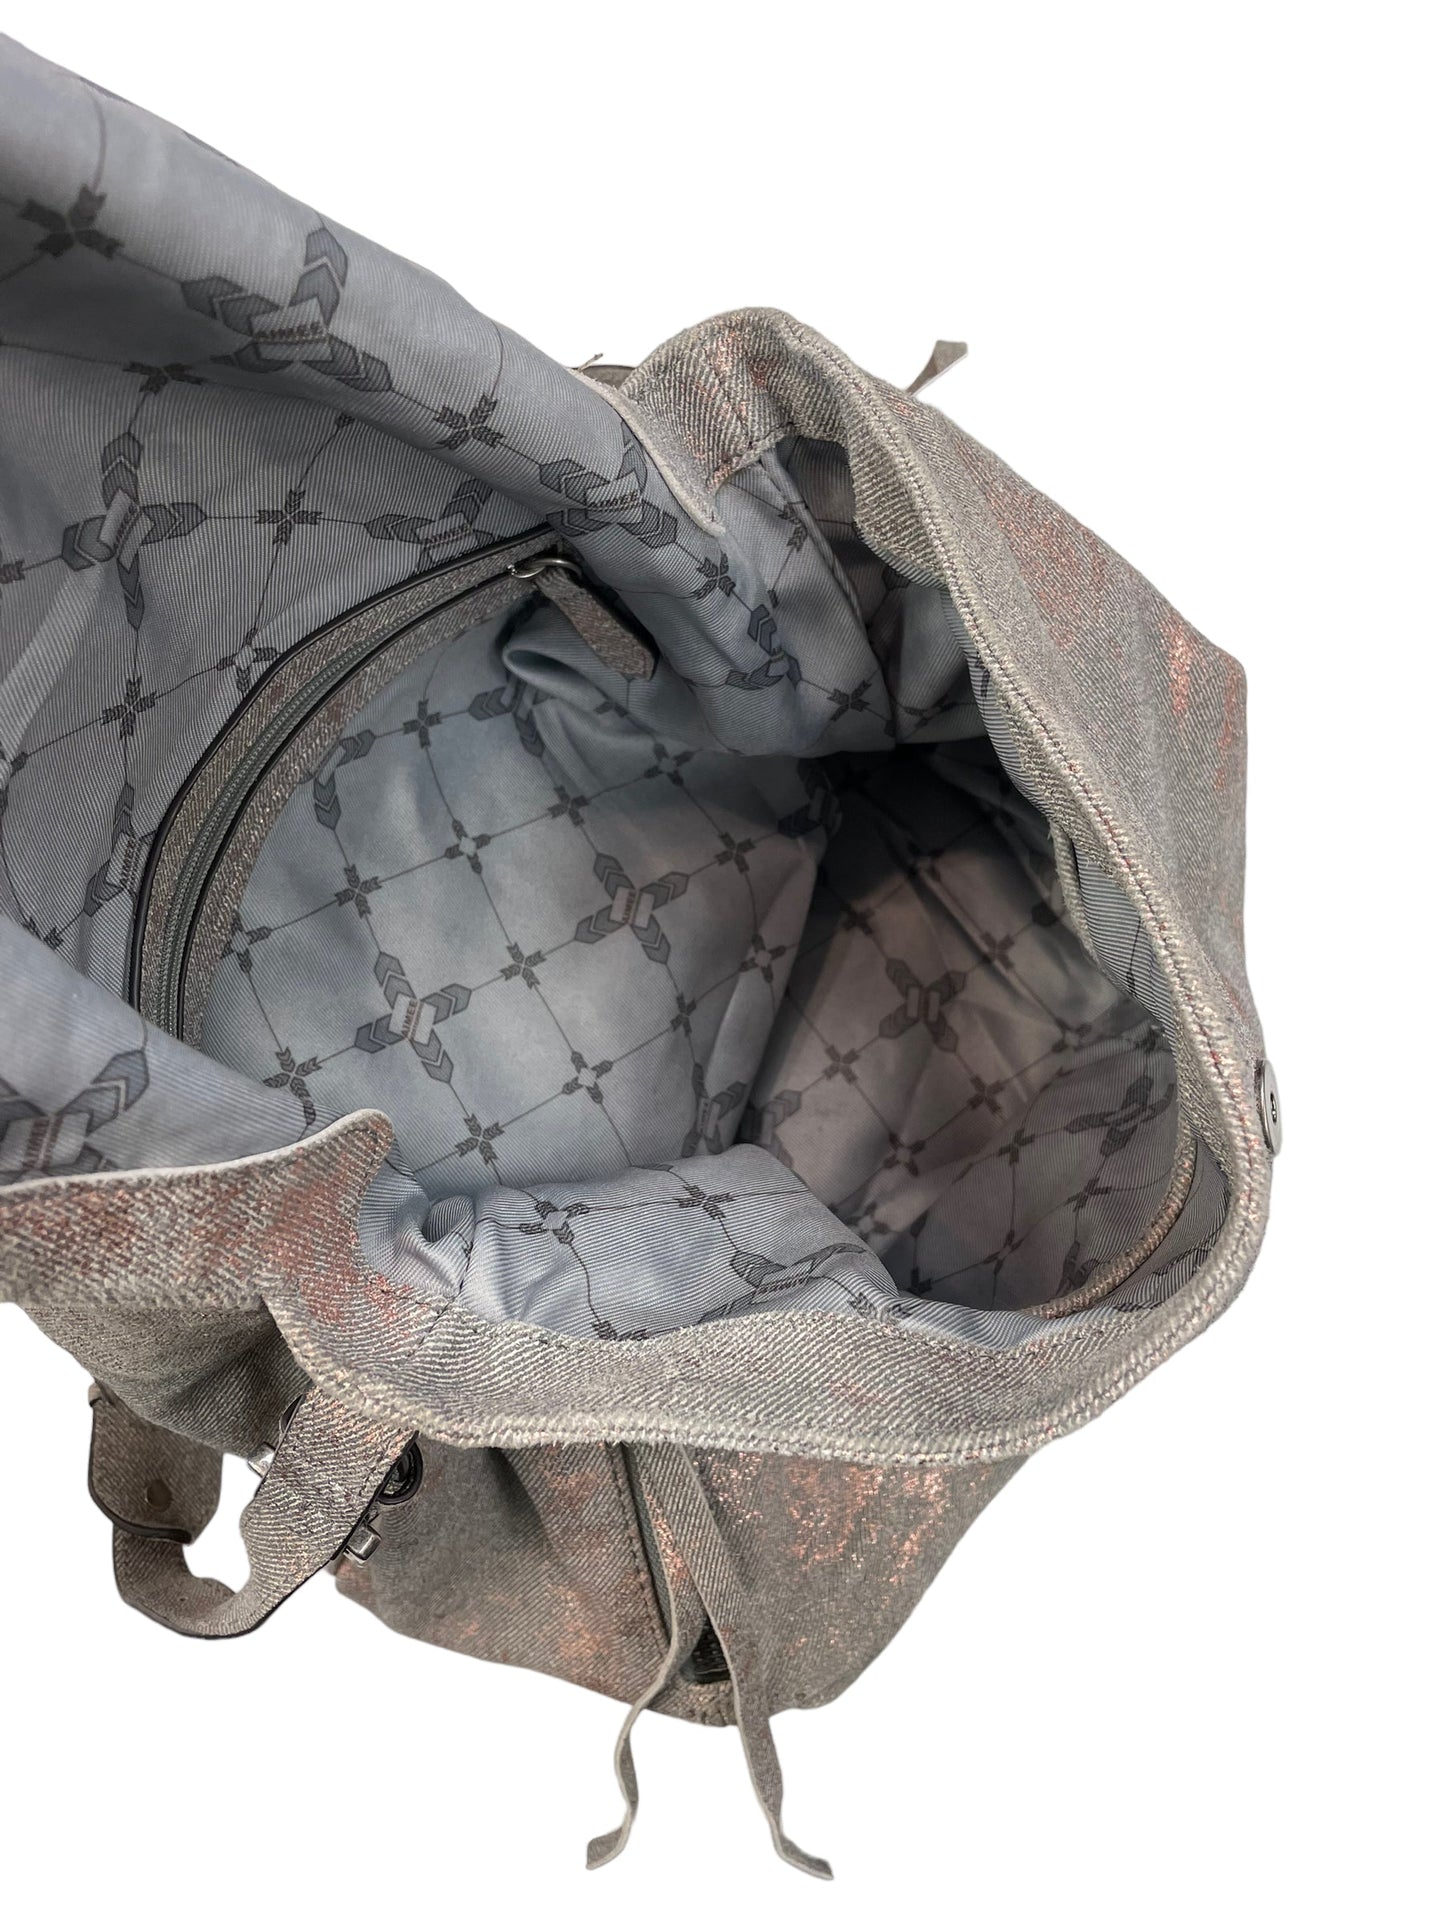 Handbag By Aimee Kestenberg  Size: Large